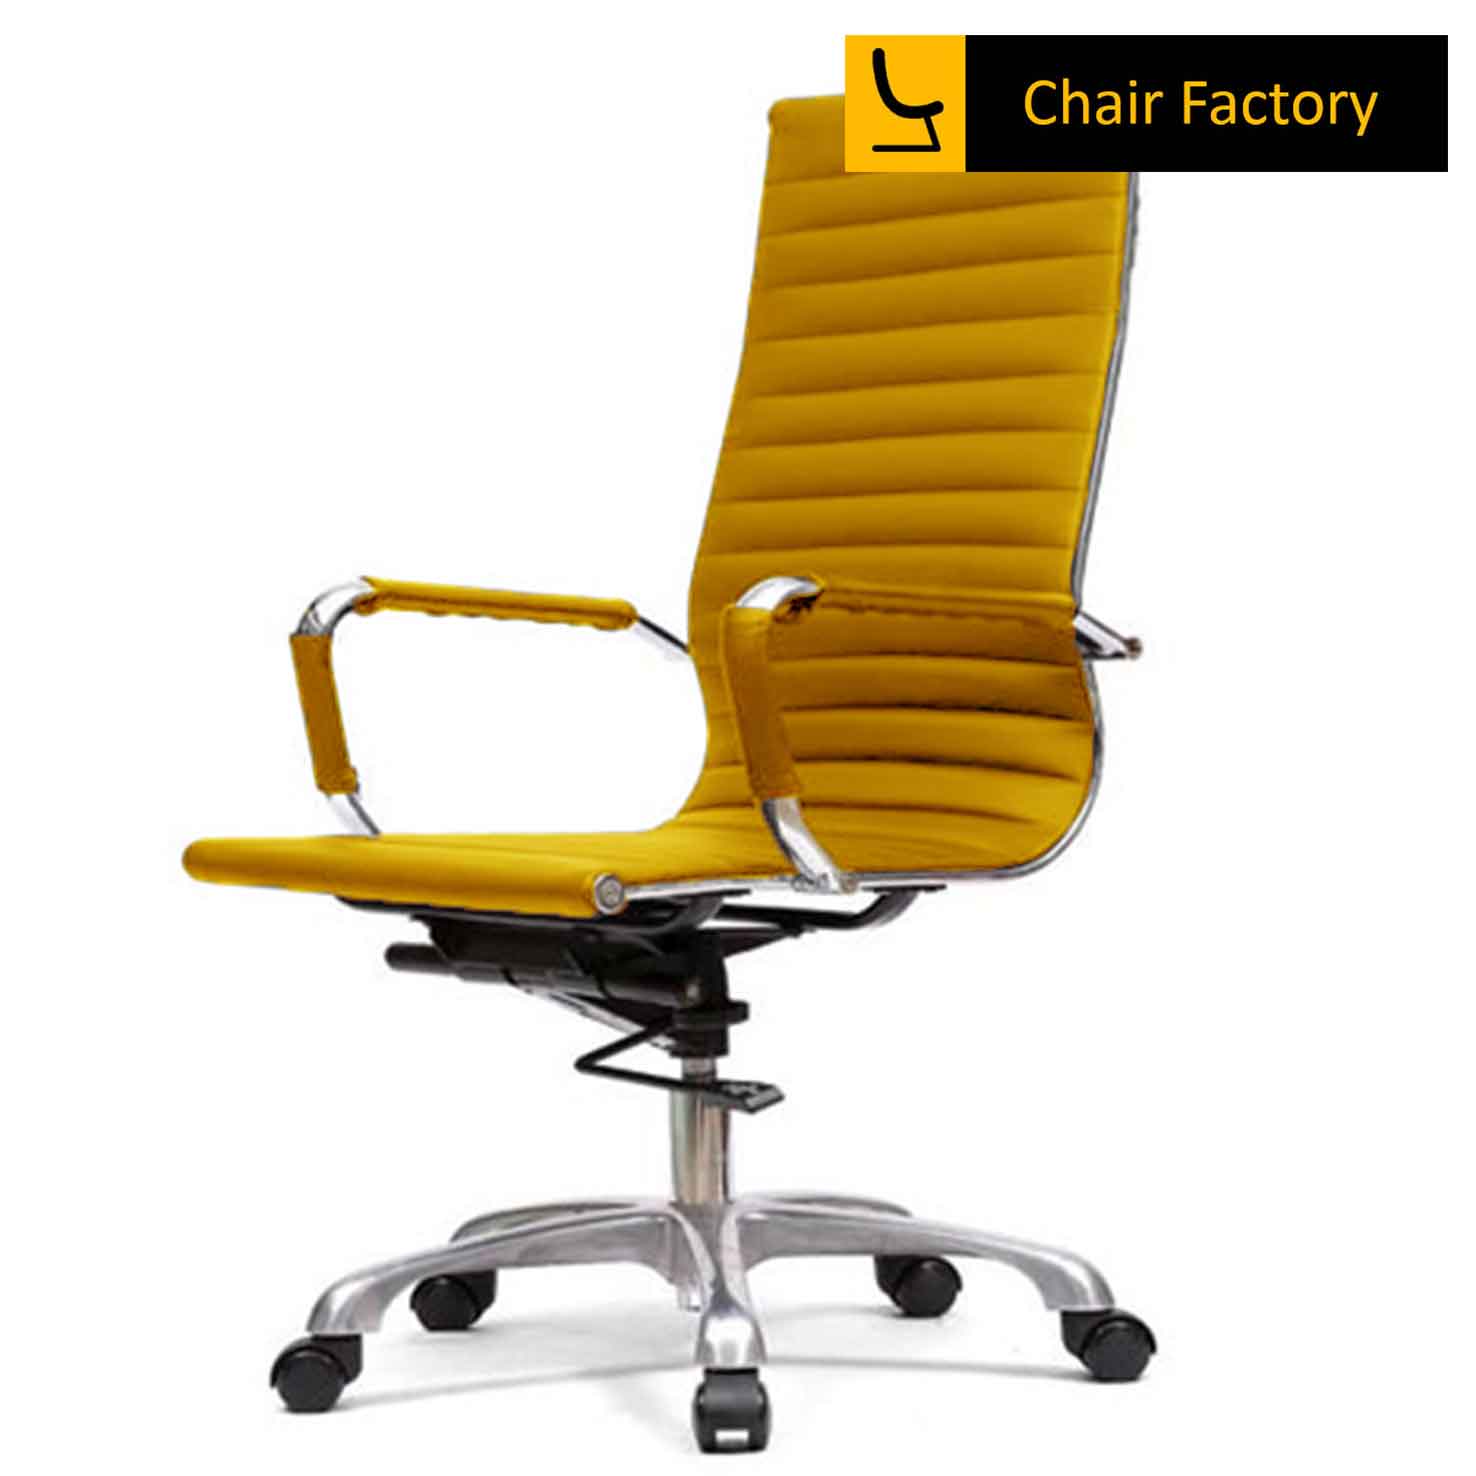 James Single Cushion Mustard High Back Leather Chair